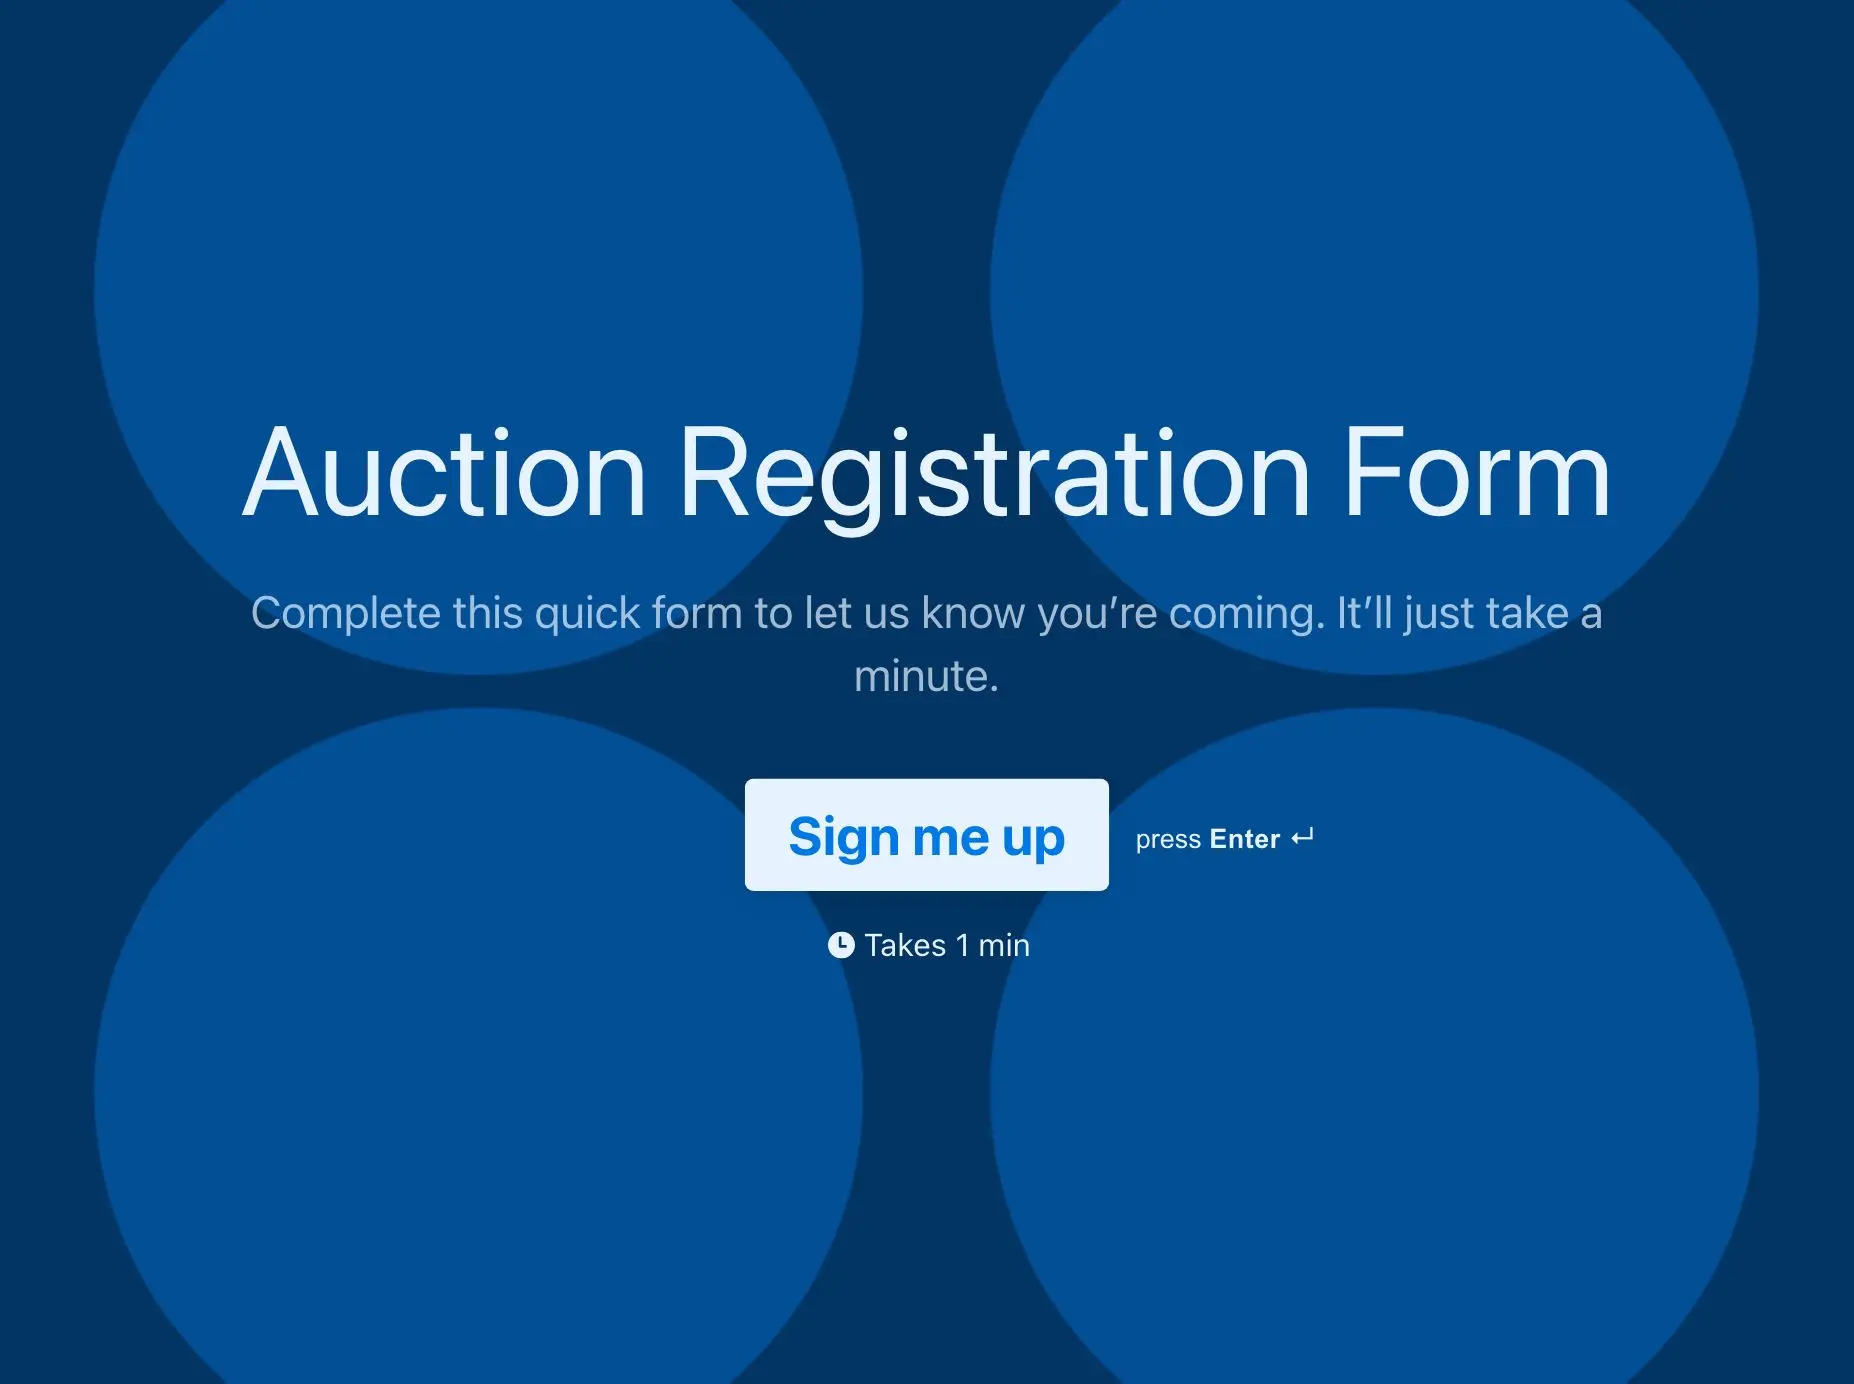 Auction Registration Form Template Hero